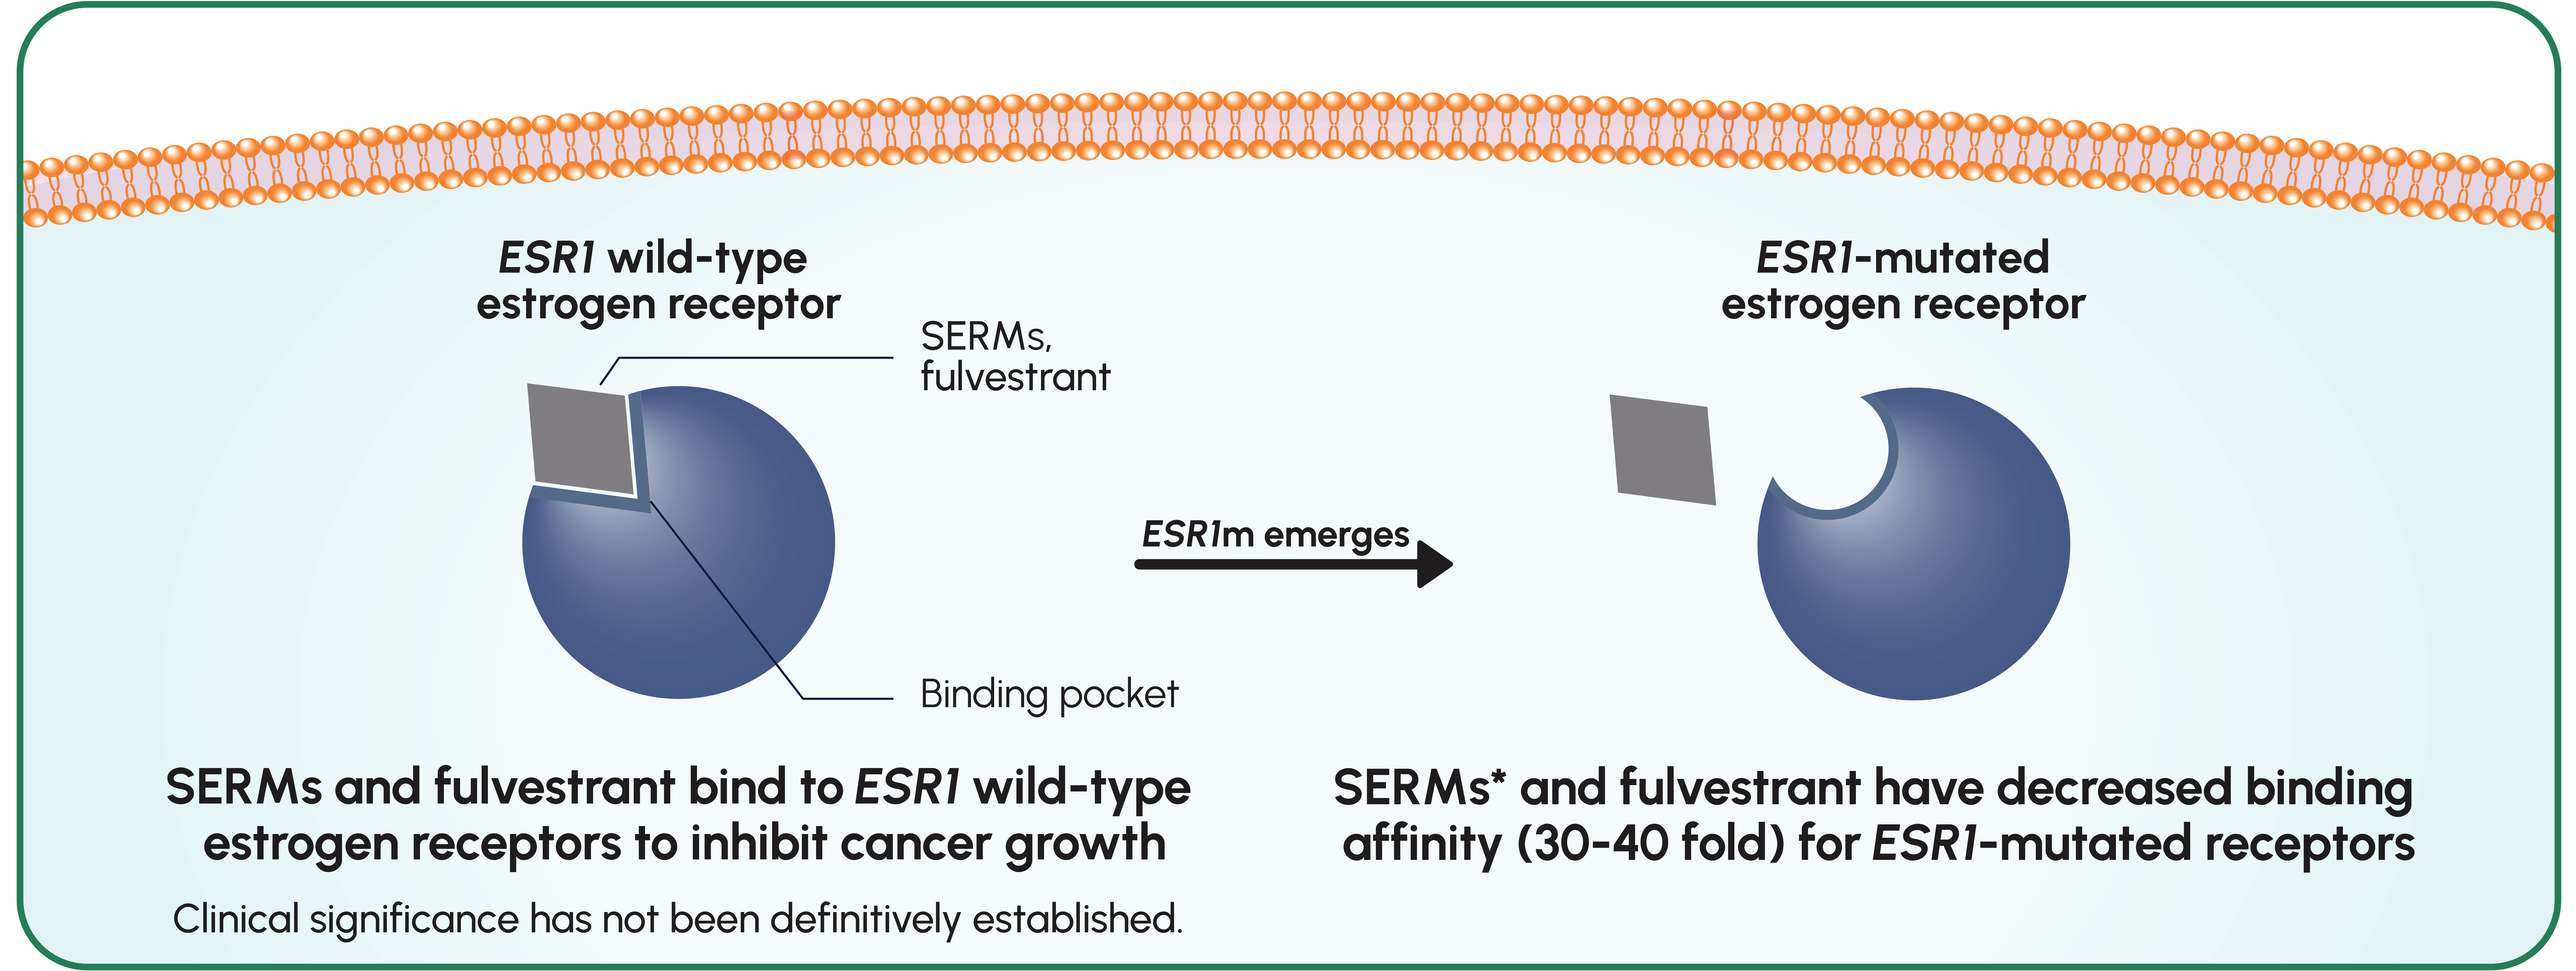 PFS in Patients Taking ORSERDU™ (elacestrant) vs SOC Endocrine Monotherapy